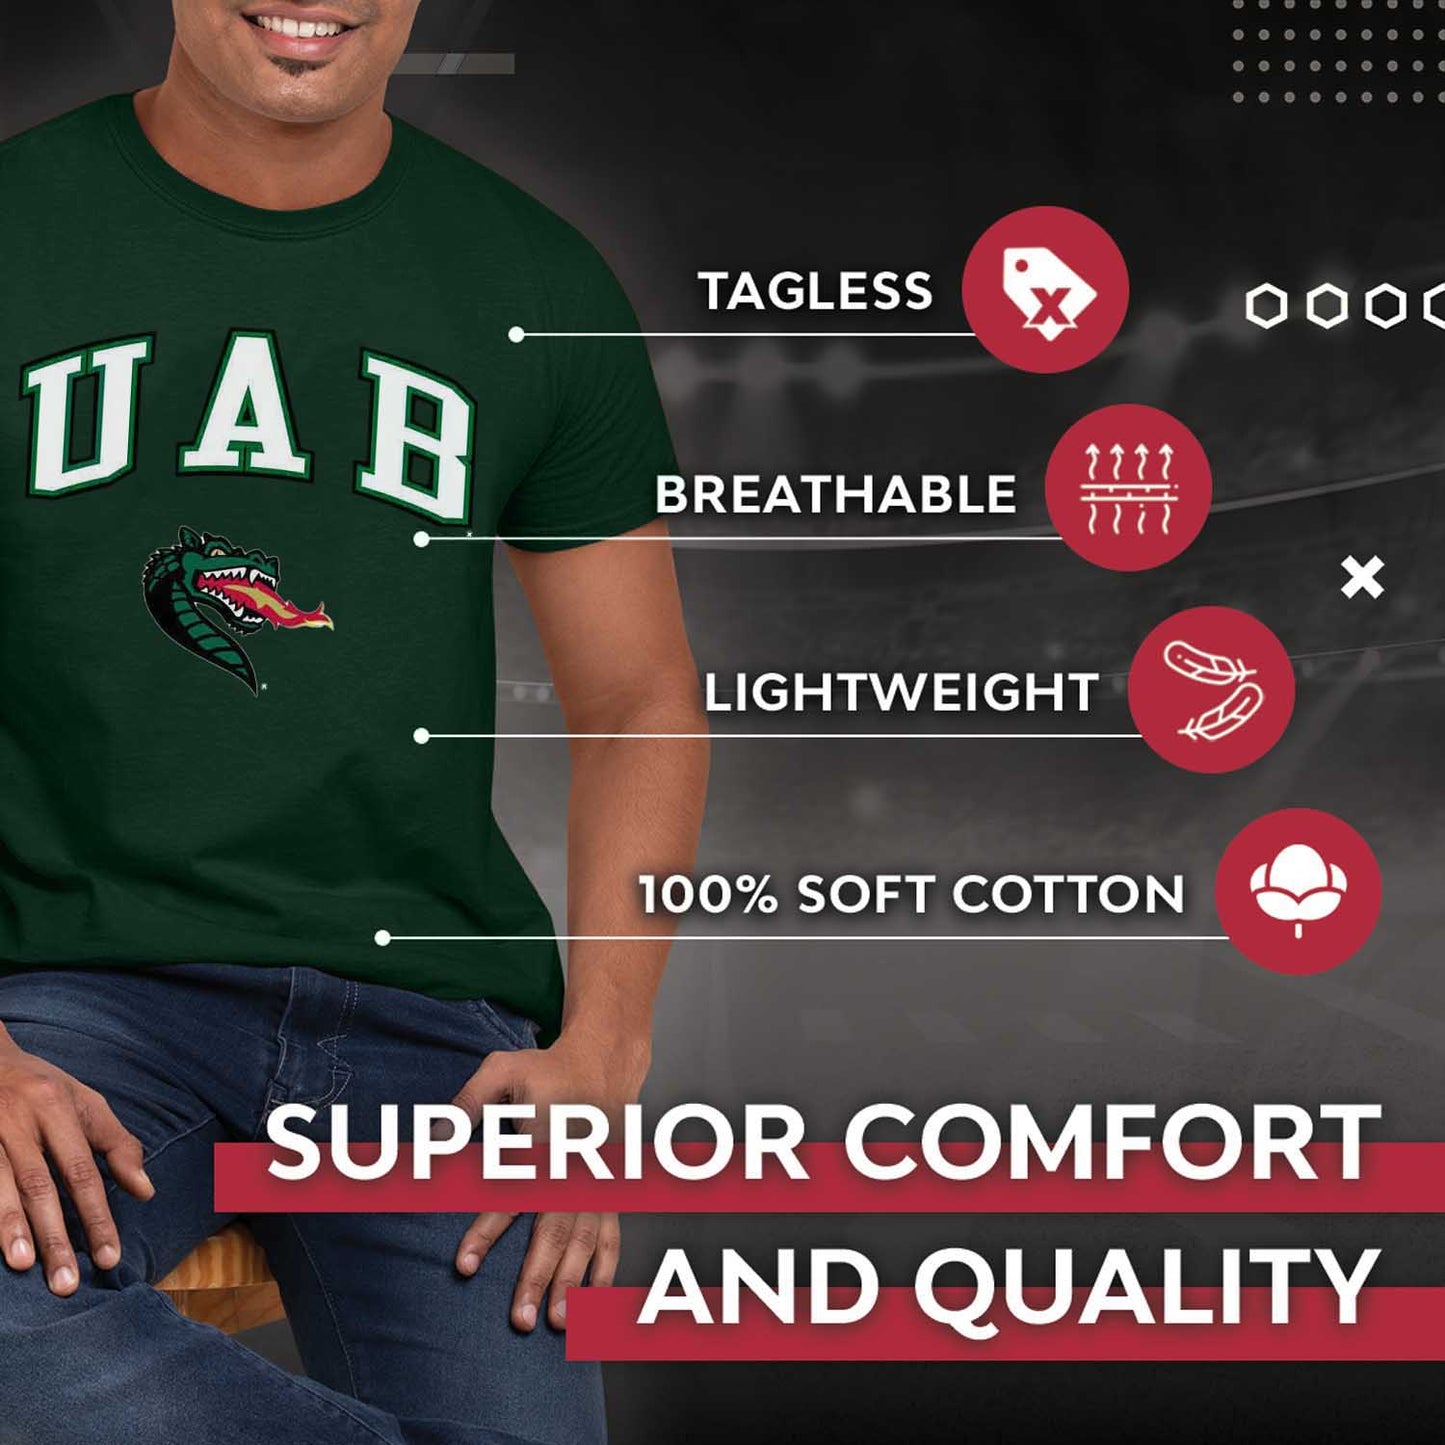 UAB Blazers NCAA Adult Gameday Cotton T-Shirt - Green